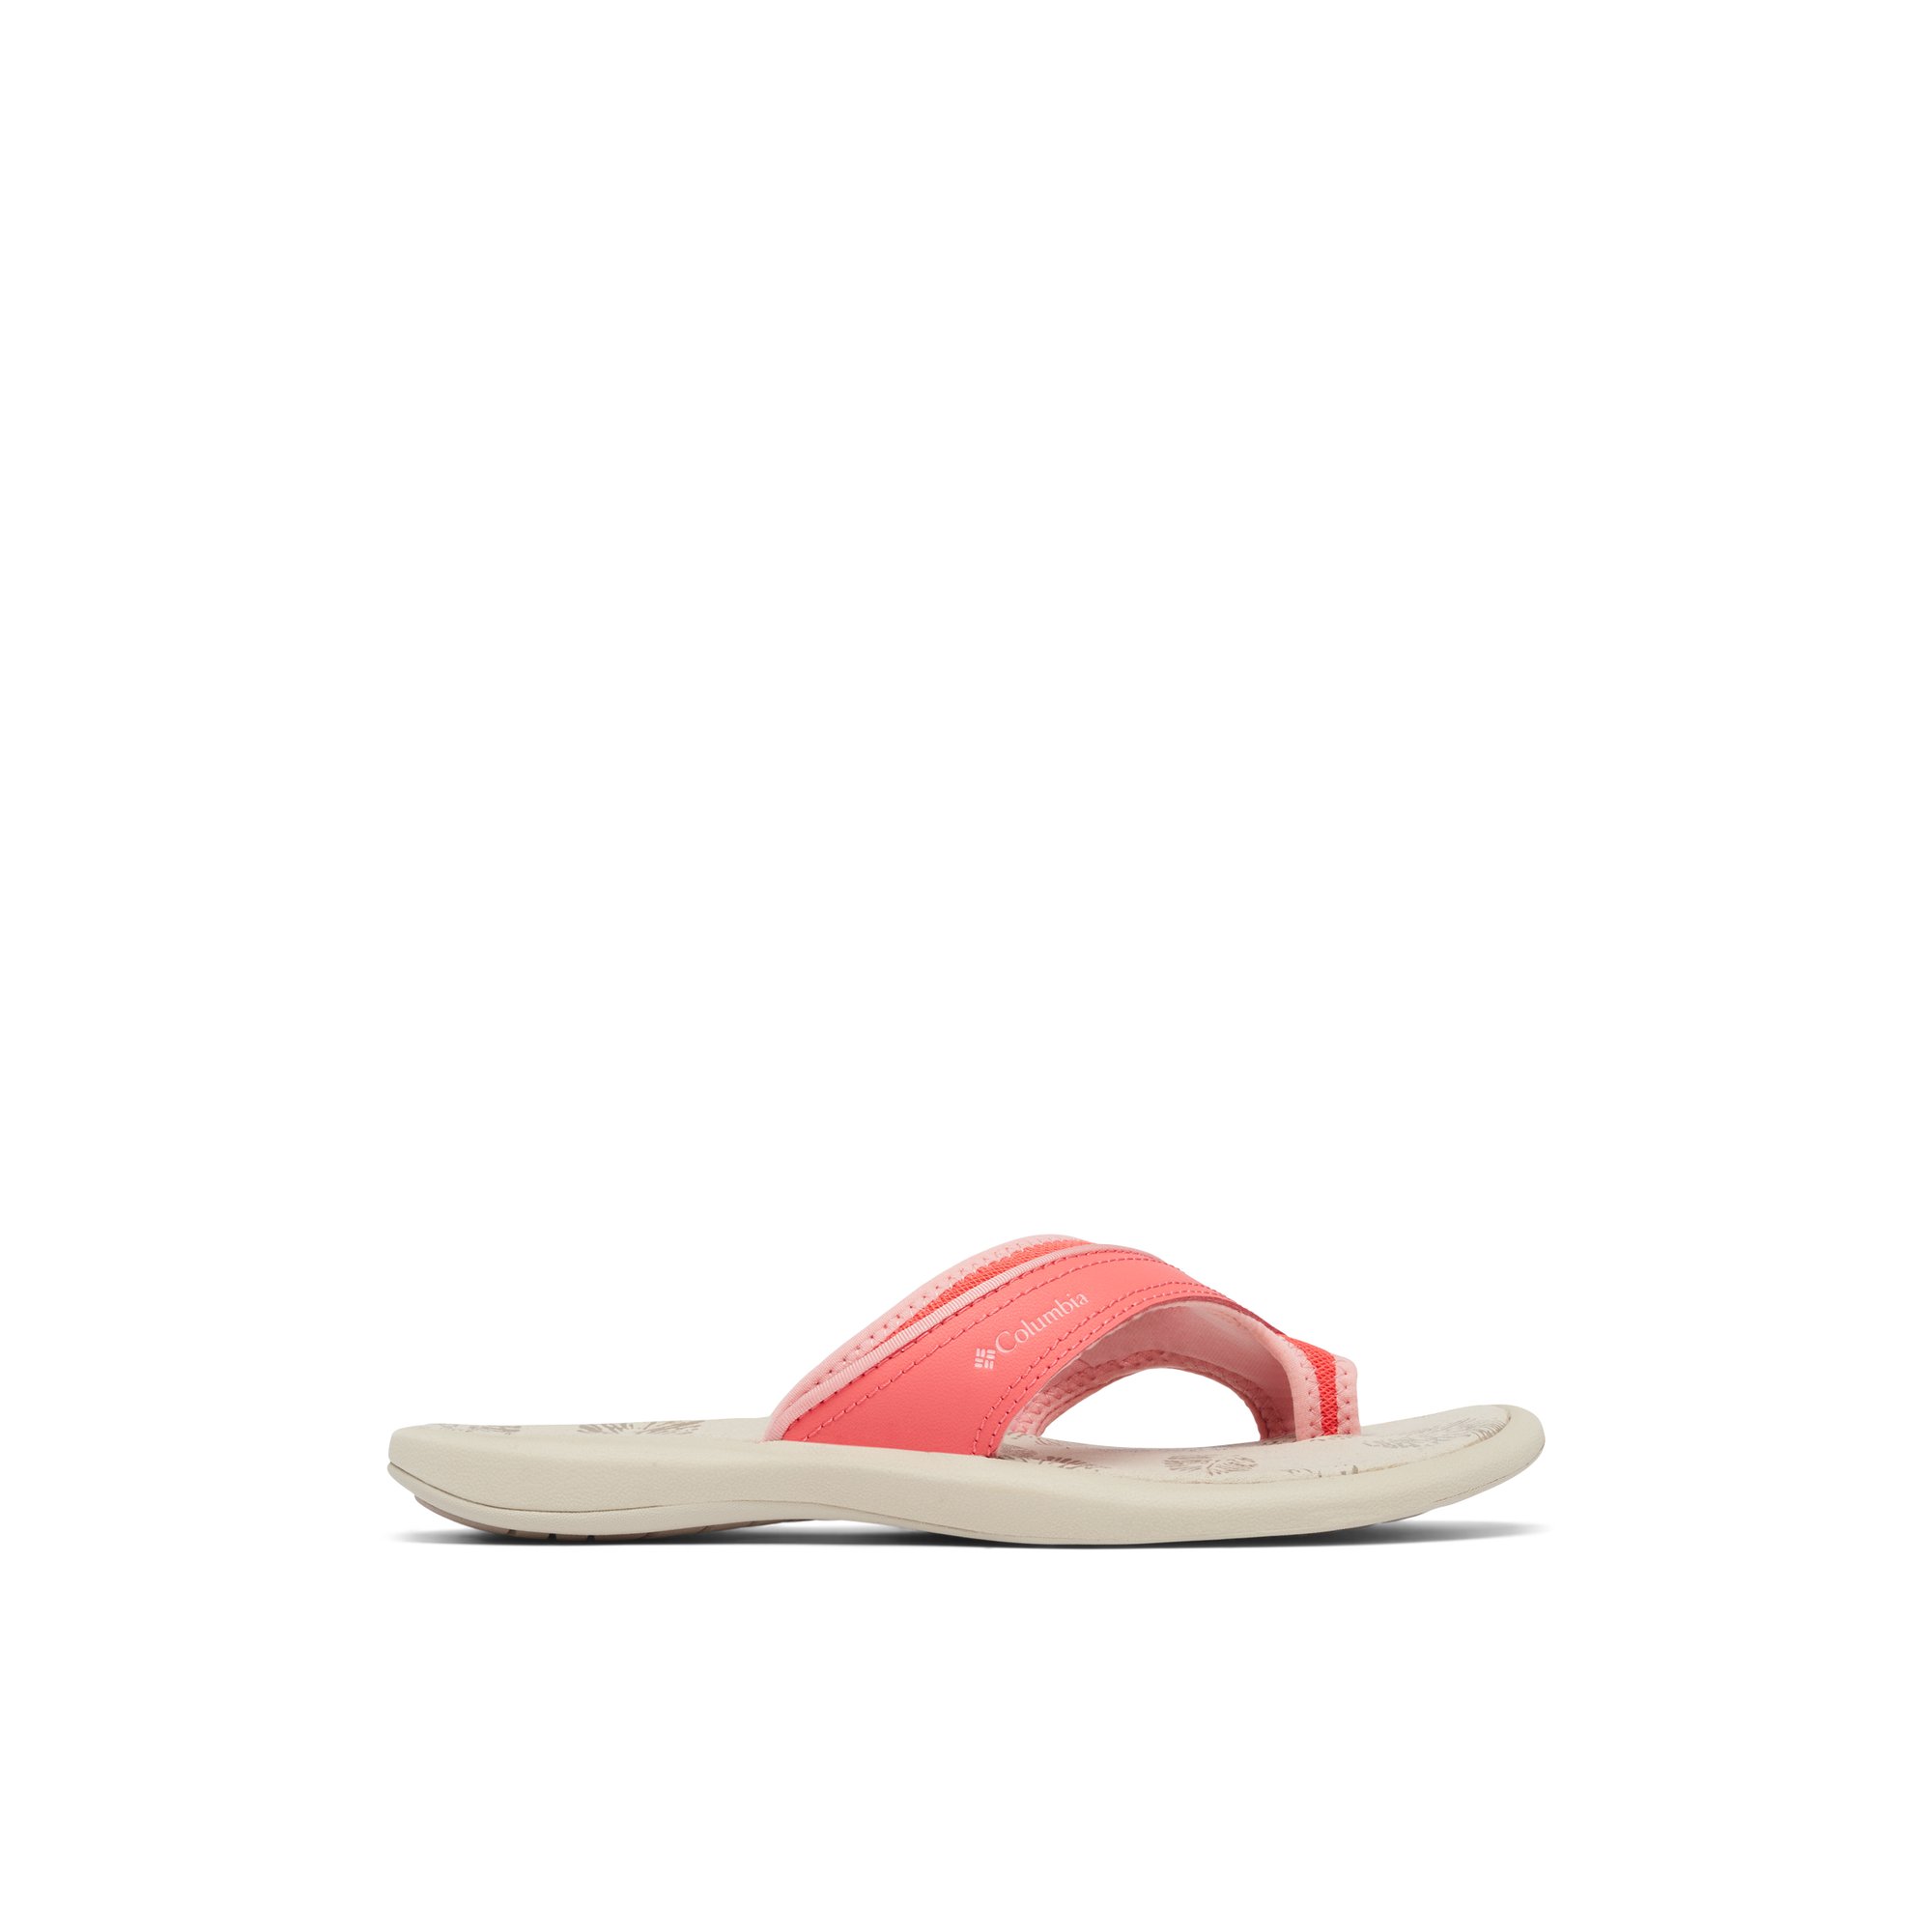 Columbia Kea ii-l - Women's Footwear Sandals Slides Pink